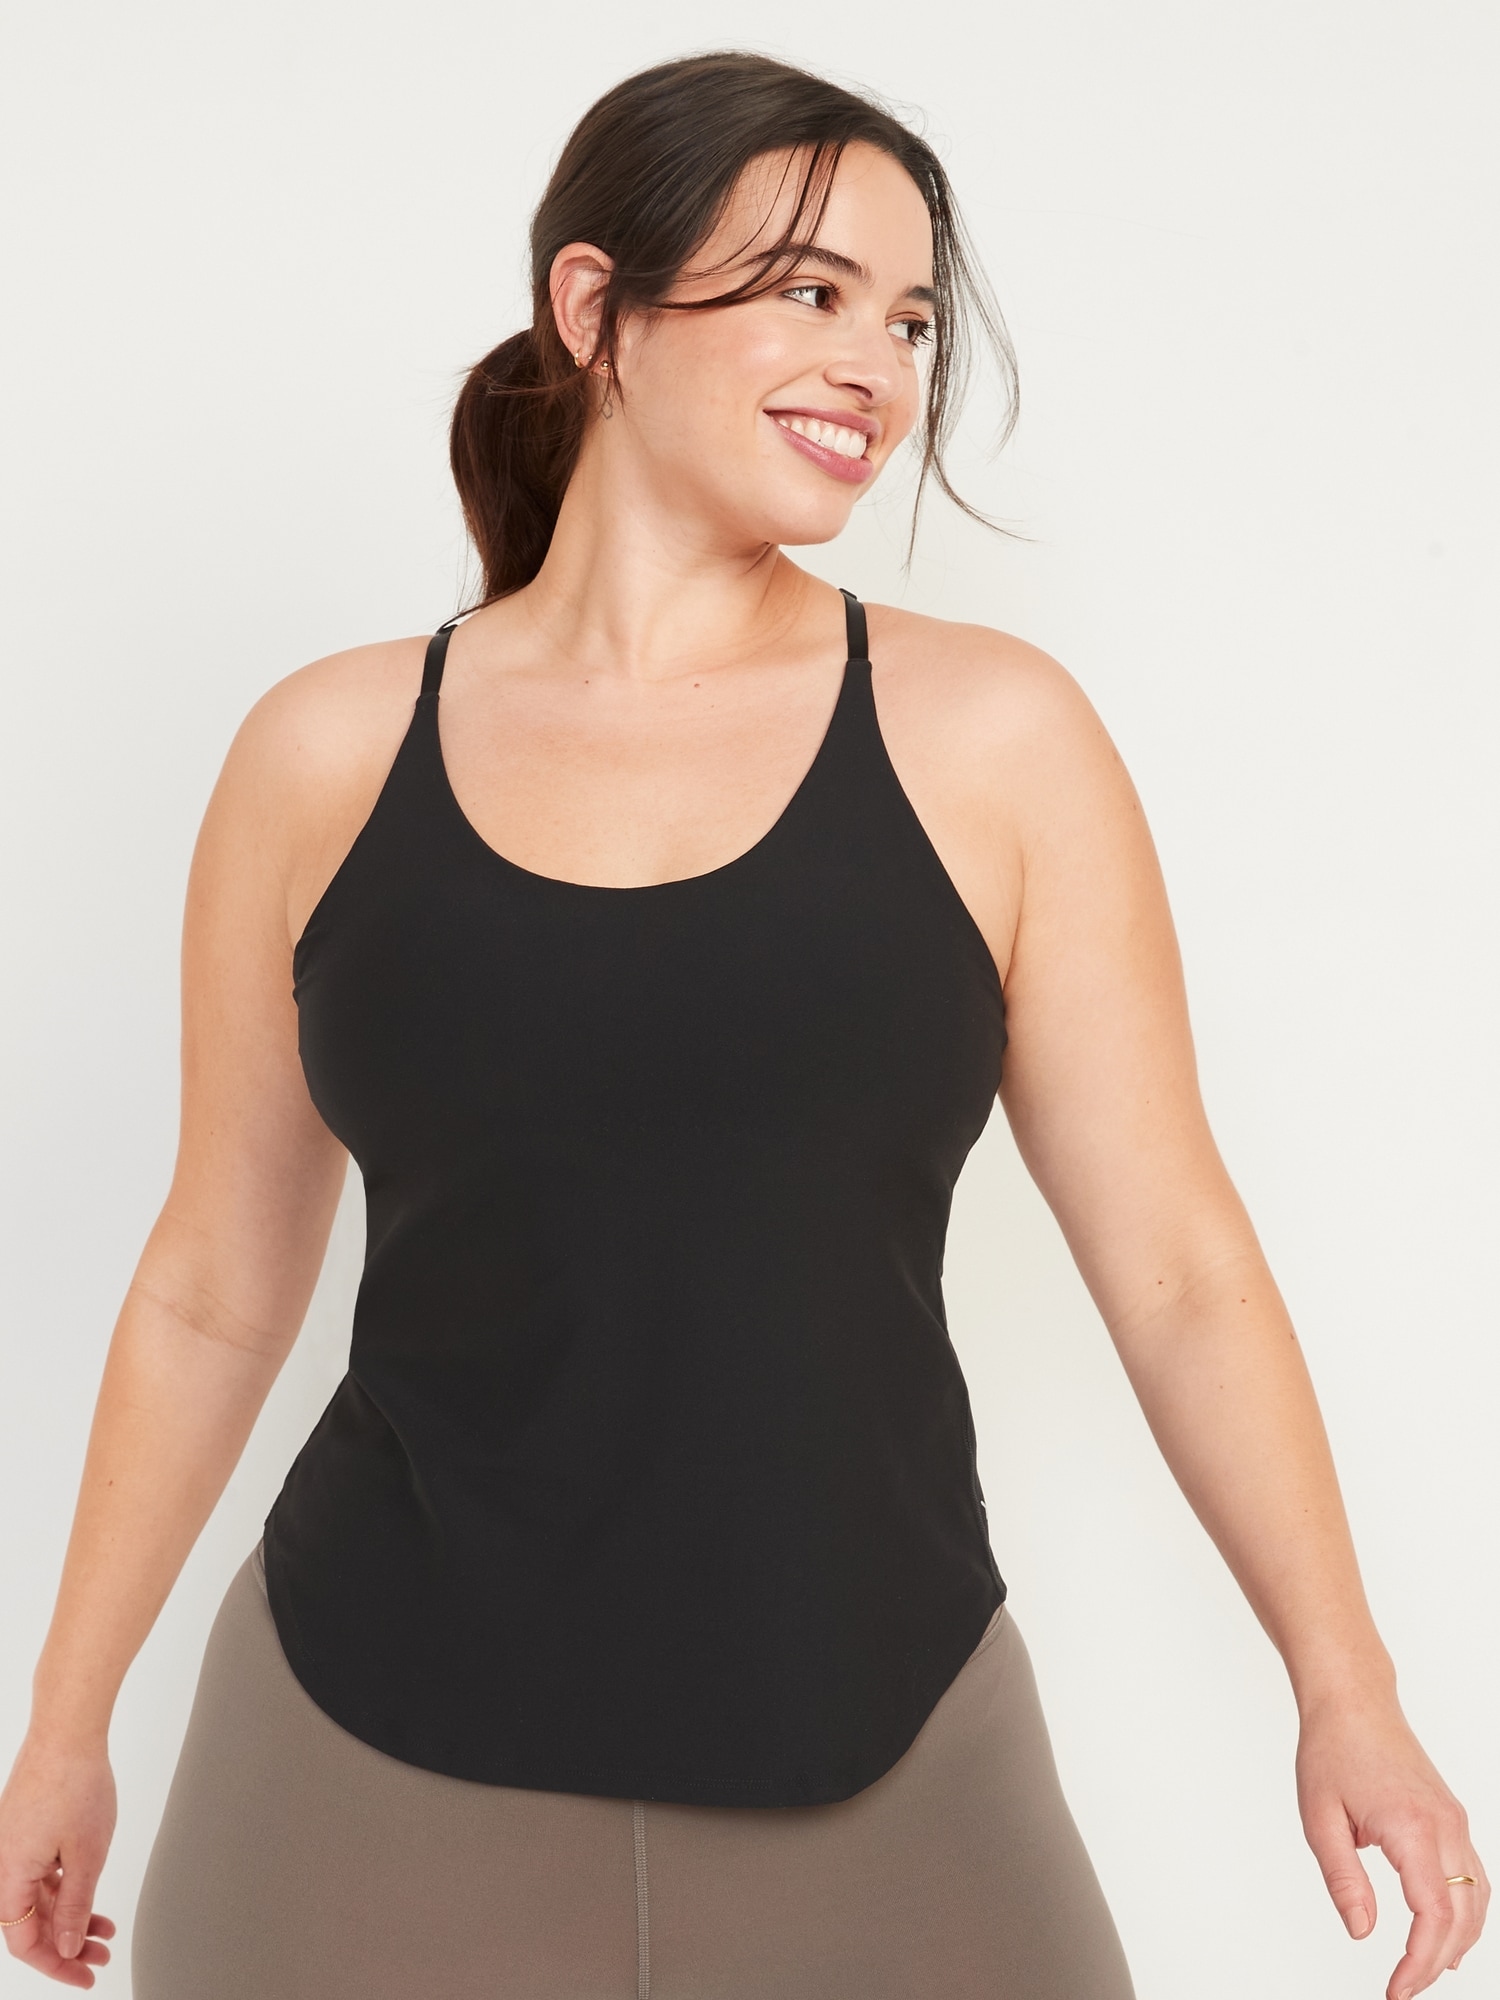 Cotton Undershirt for Women Tank Tops with Built-in Shelf Bra Racerback Workout  Yoga Top with Shelf Bra 